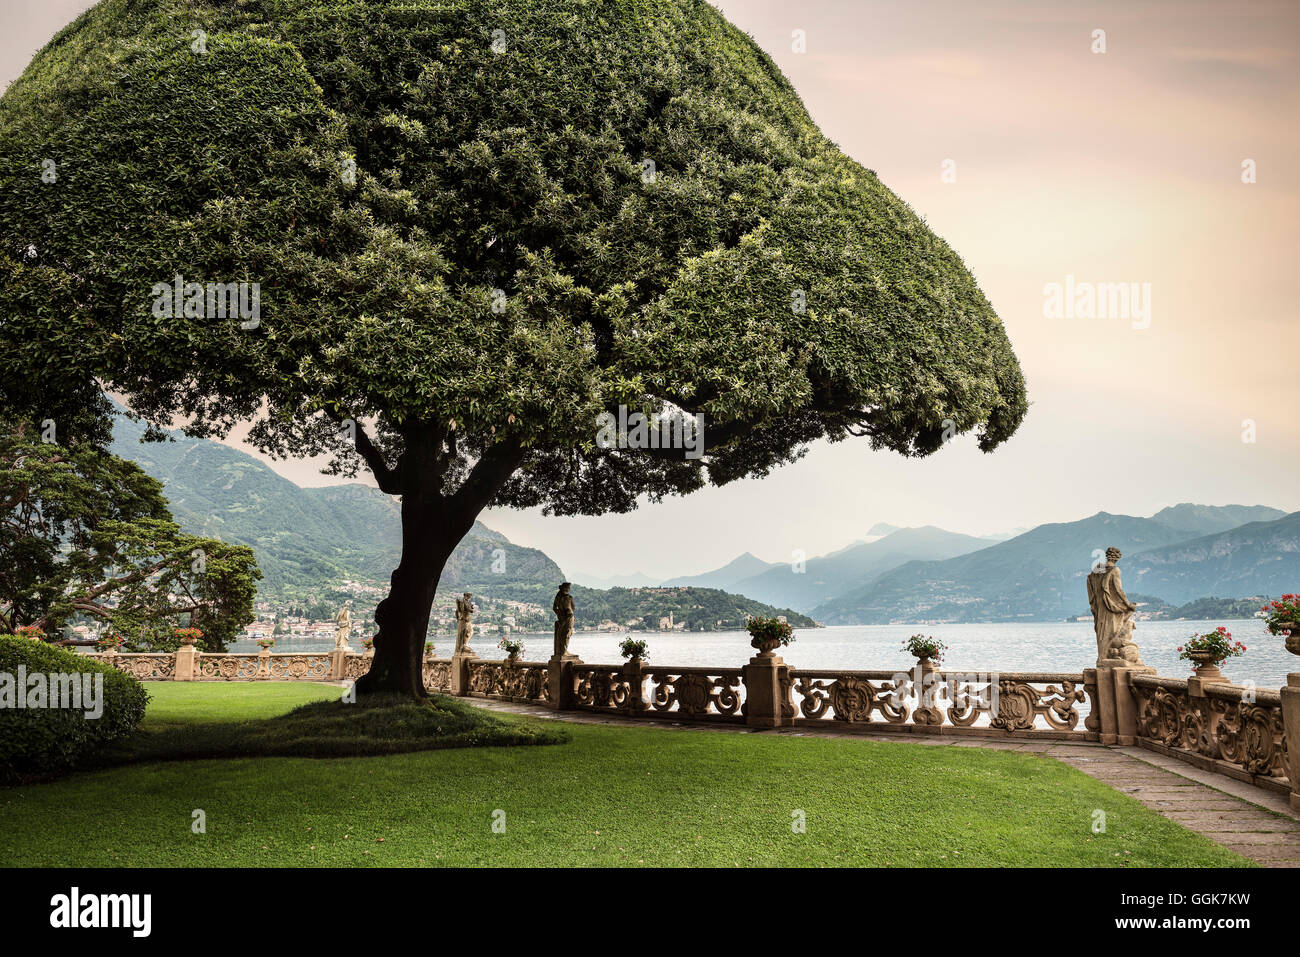 Garden with awesome tree in Villa del Balbianello, Lenno, Lake Como, Lombardy, Italy, Europe Stock Photo